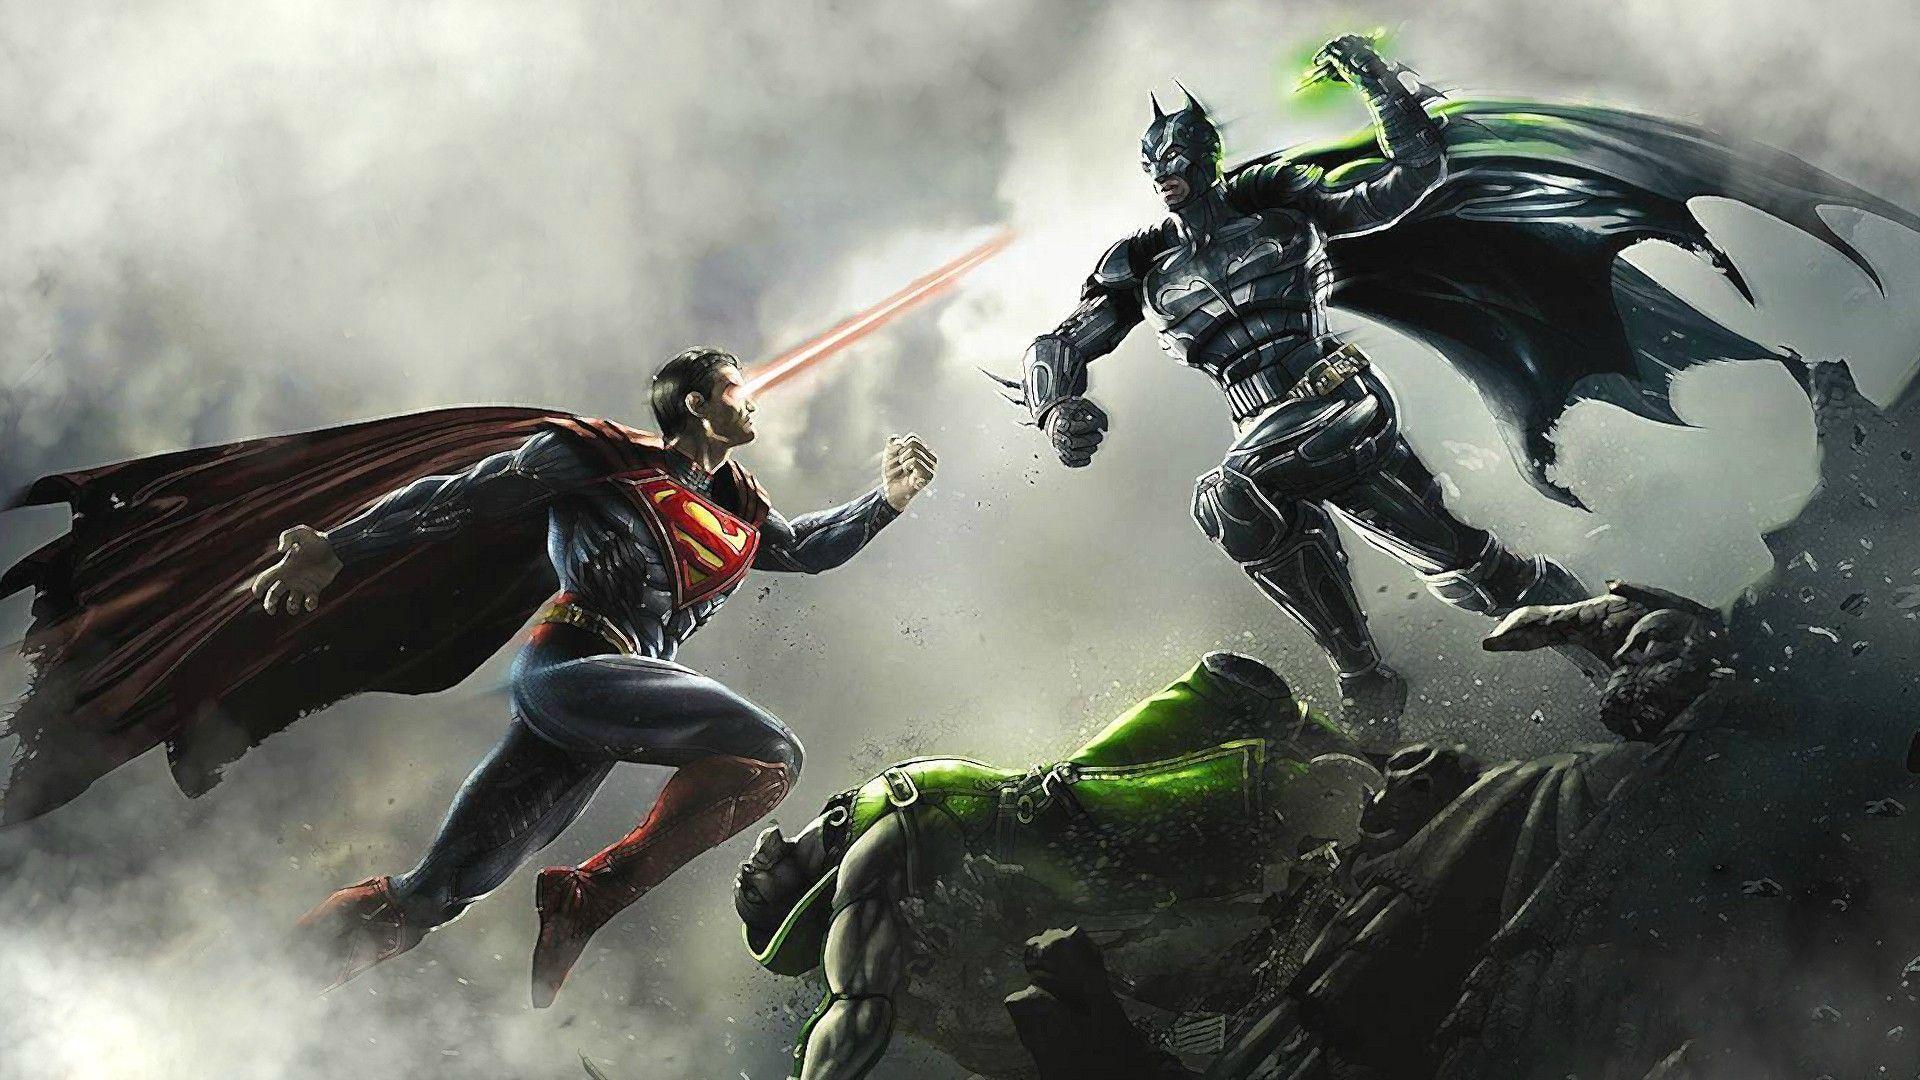 In light of the Batman vs Superman movie, here&;s a sick wallpaper